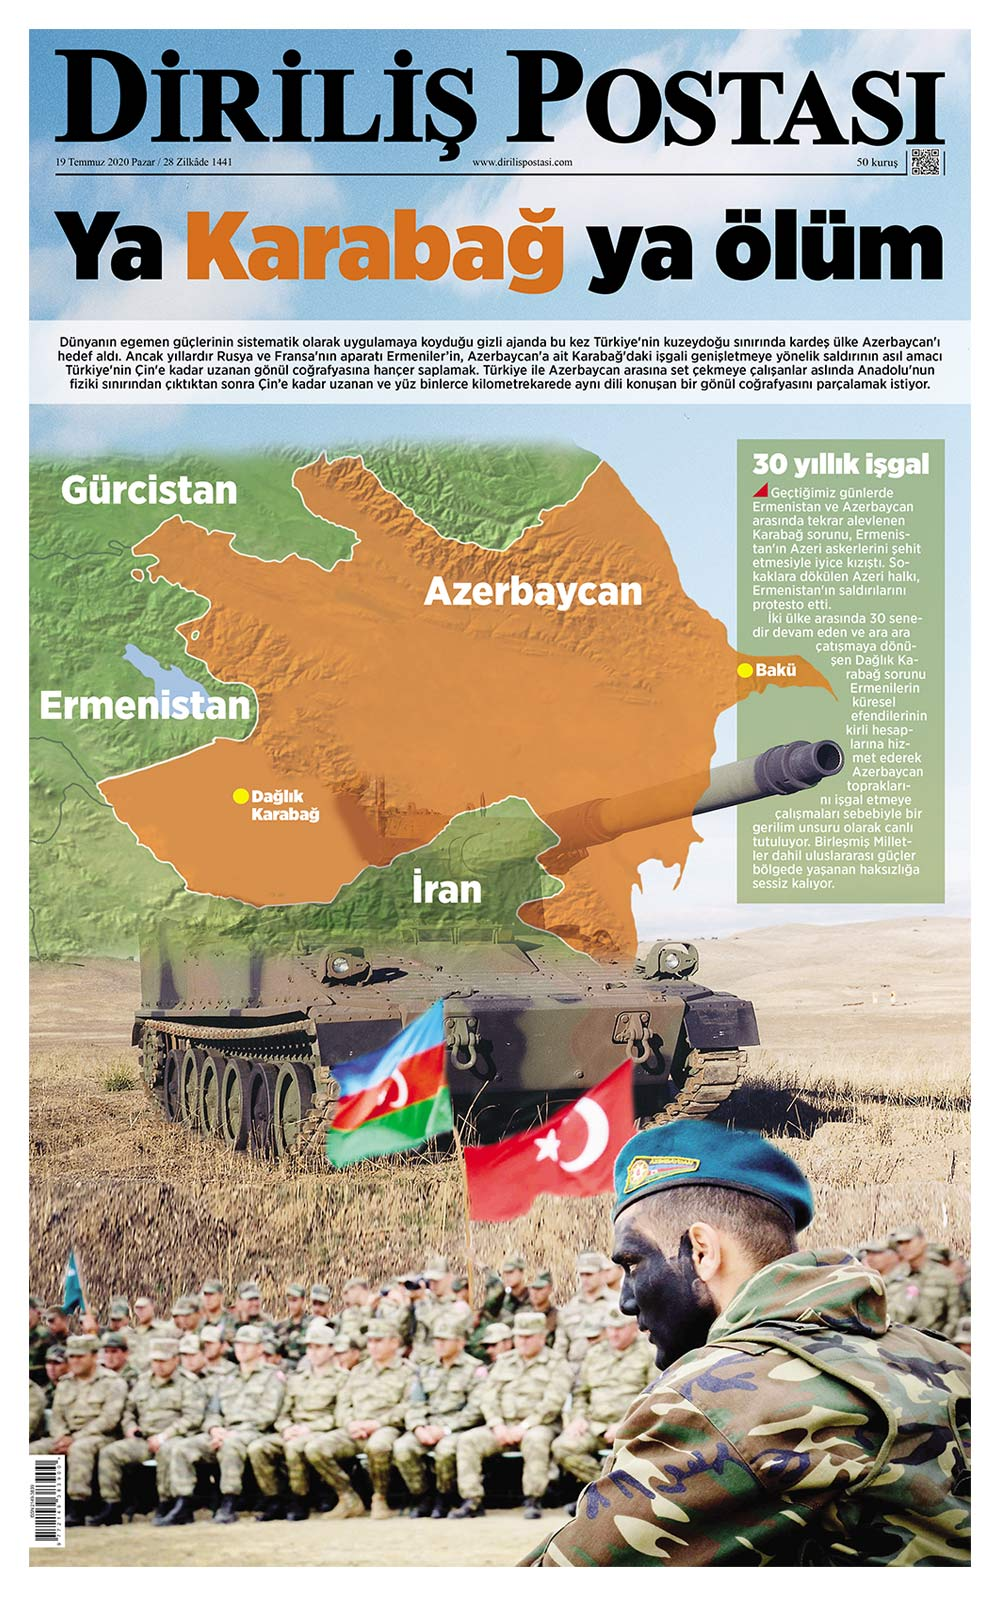 Analysis: The biggest winner from the Azerbaijan-Armenia war is Turkey